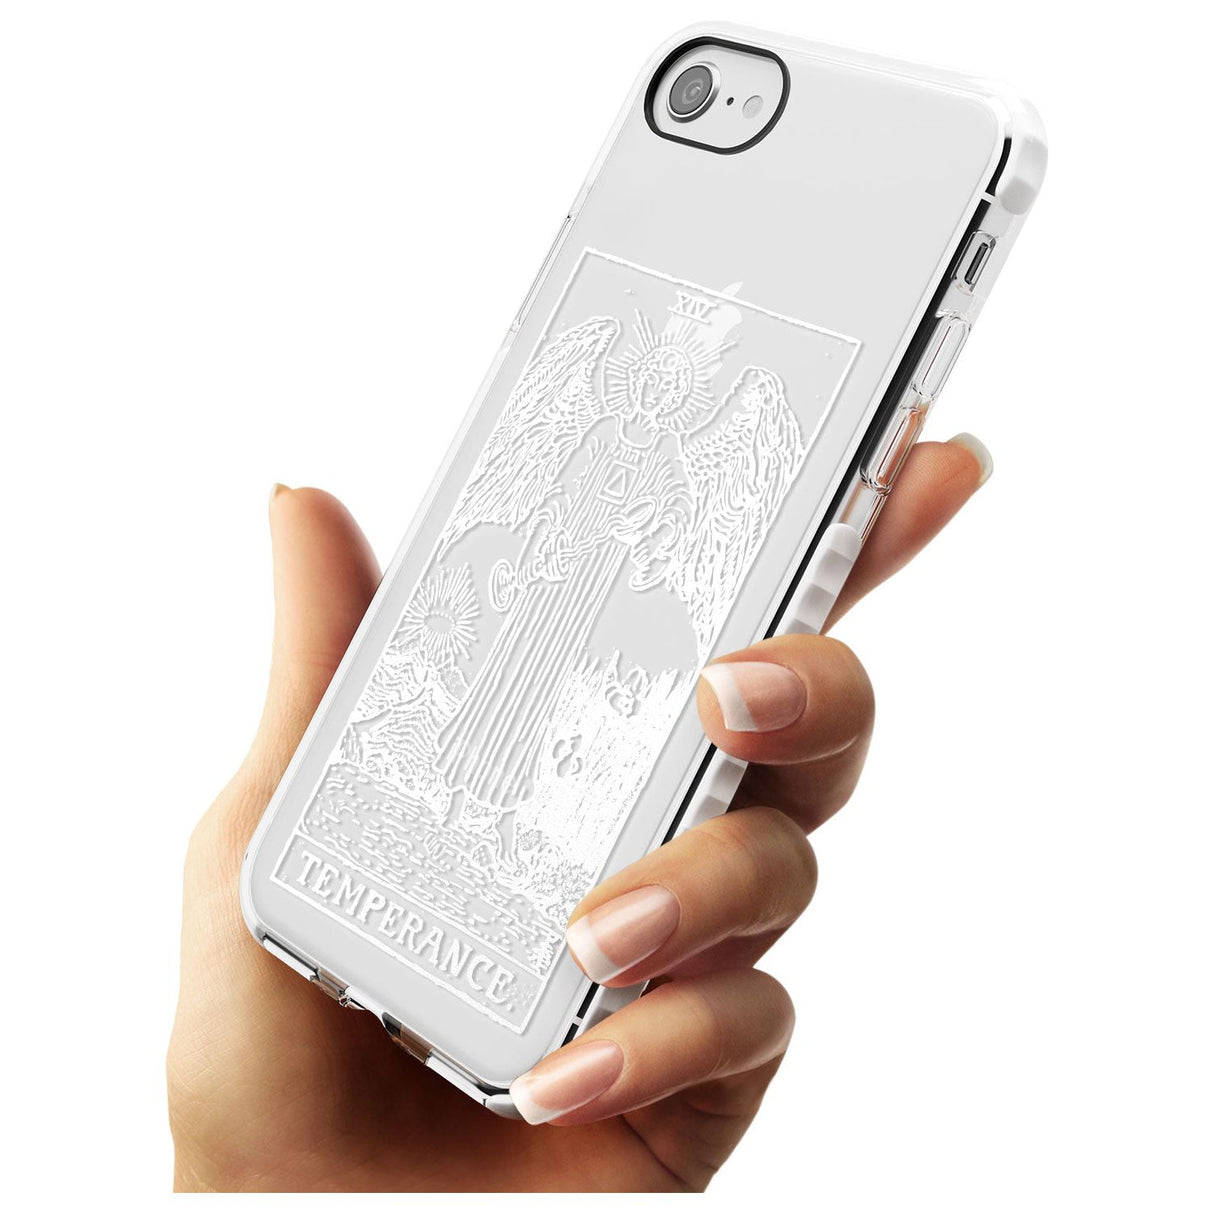 Temperance Tarot Card - White Transparent Slim TPU Phone Case for iPhone SE 8 7 Plus